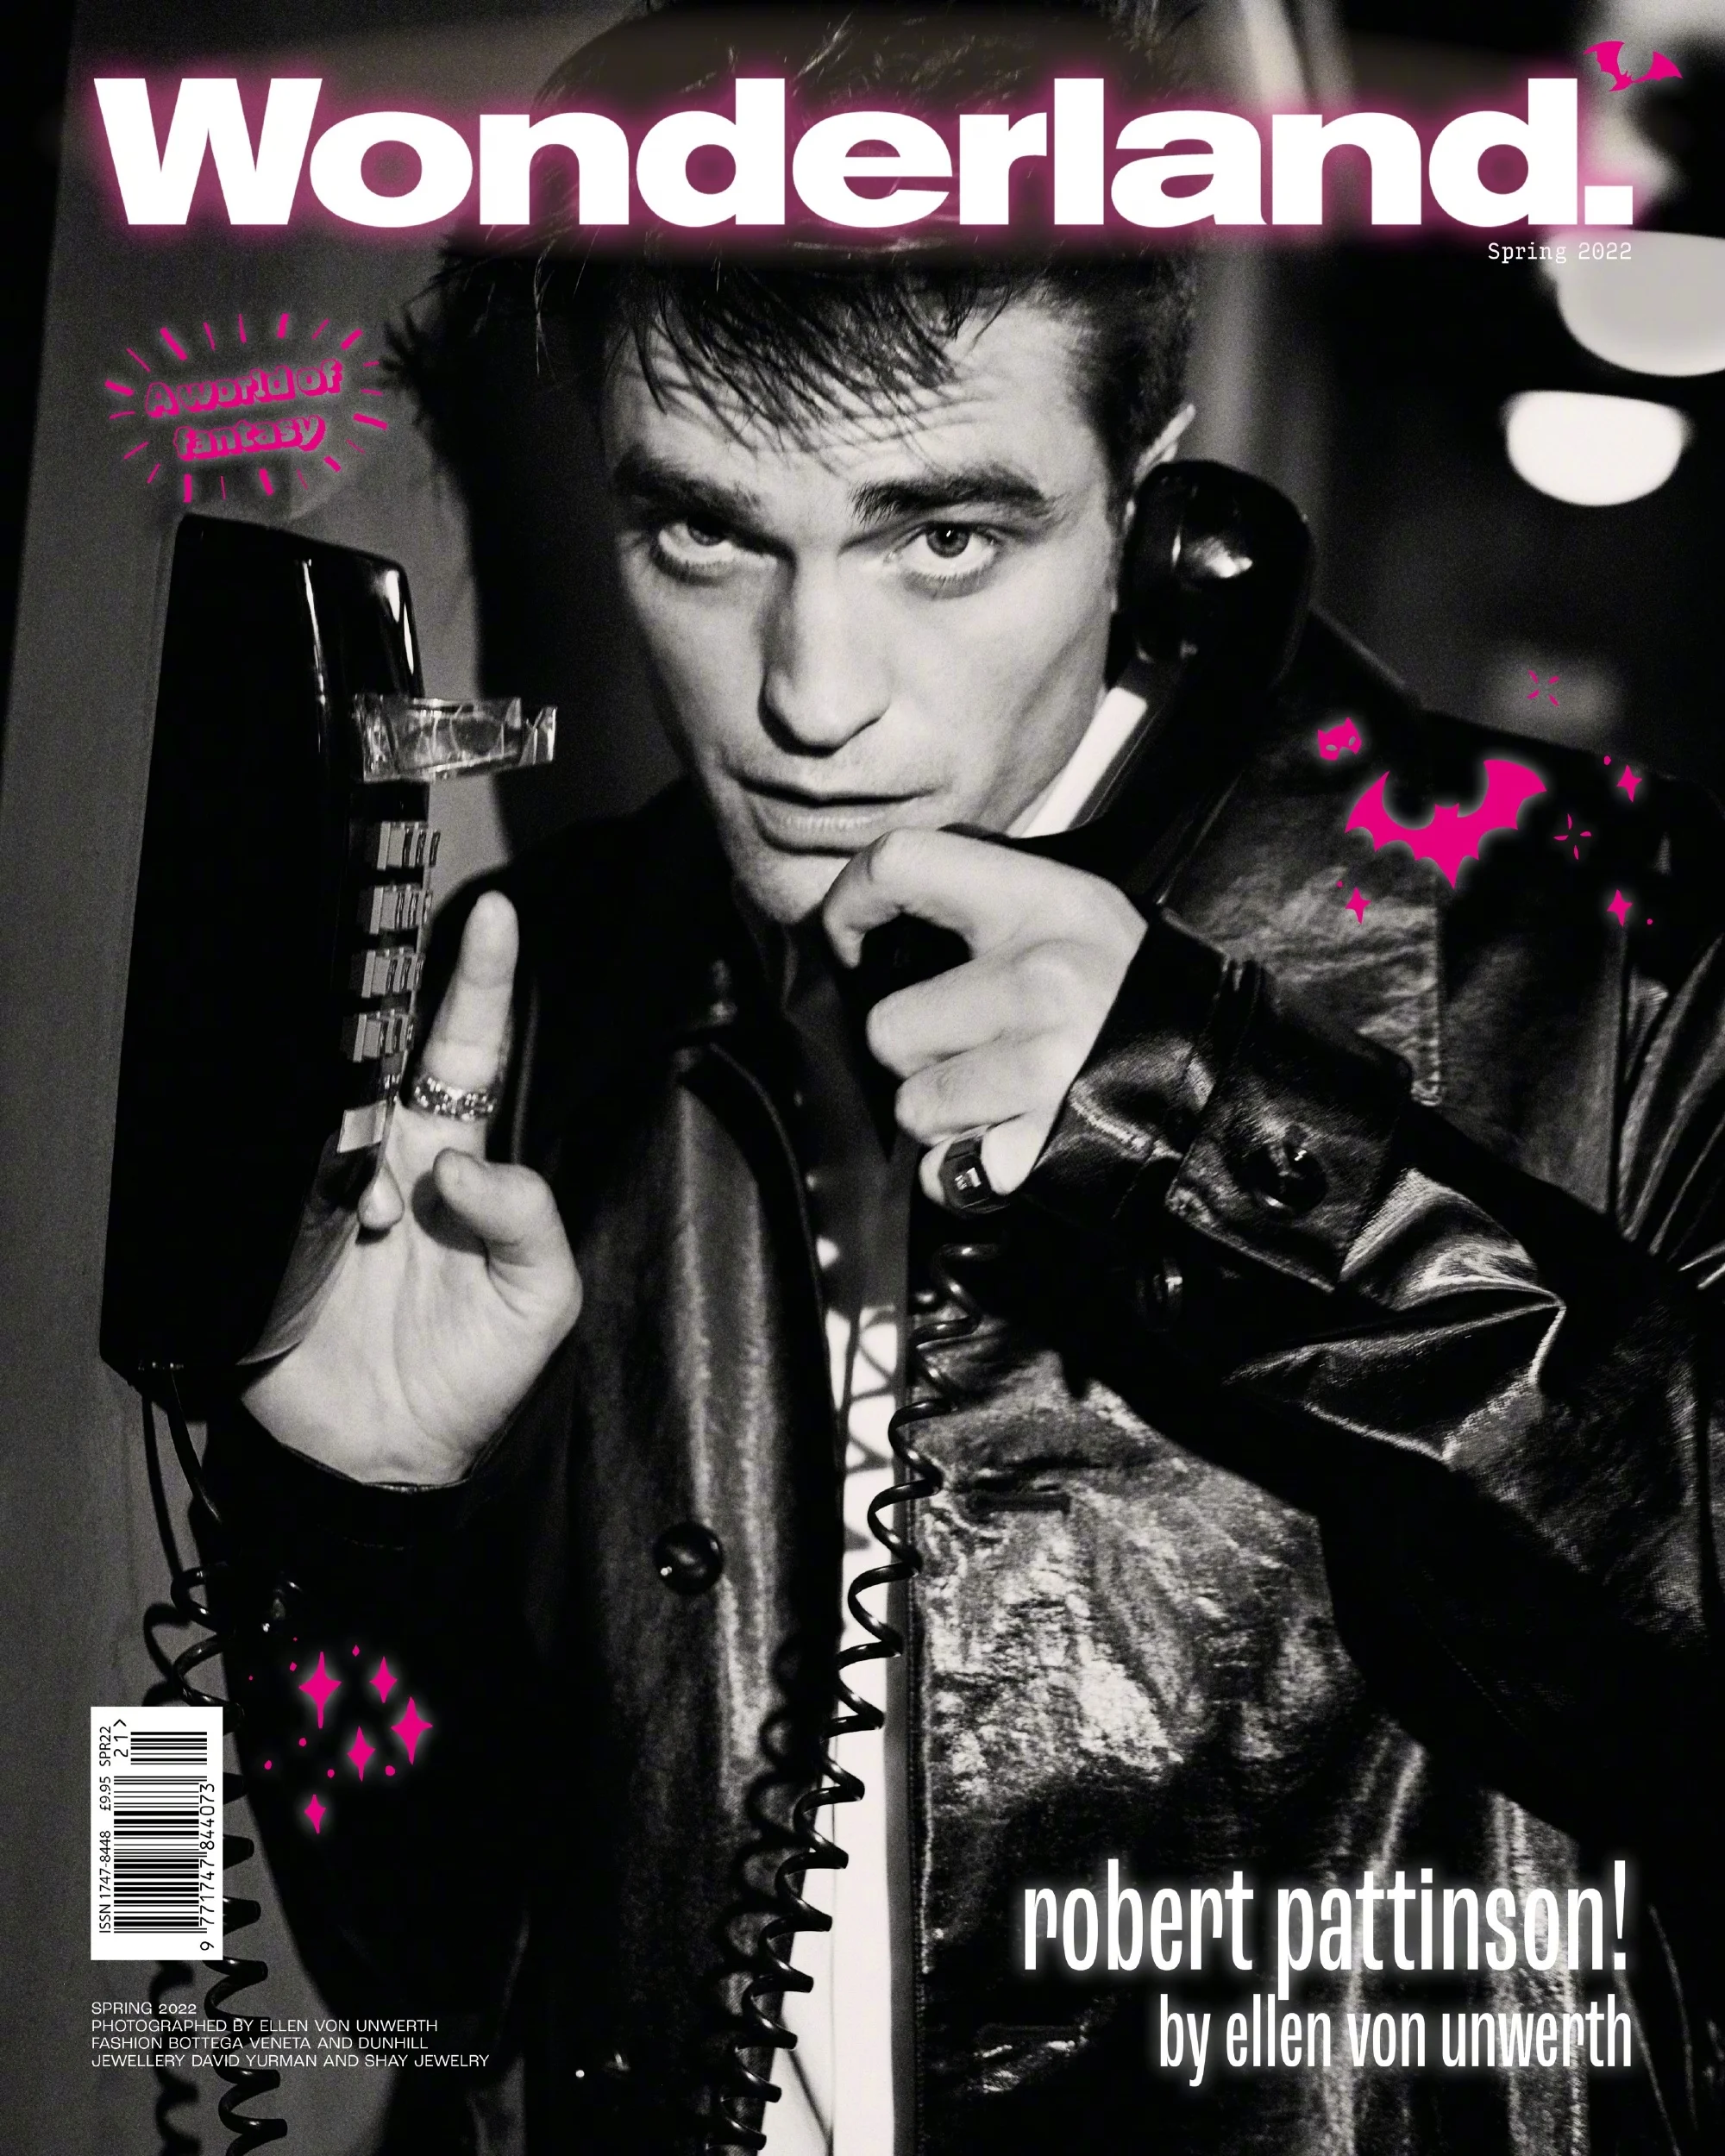 Robert Pattinson & Zoë Kravitz on the cover of the new issue of Wonderland​​​